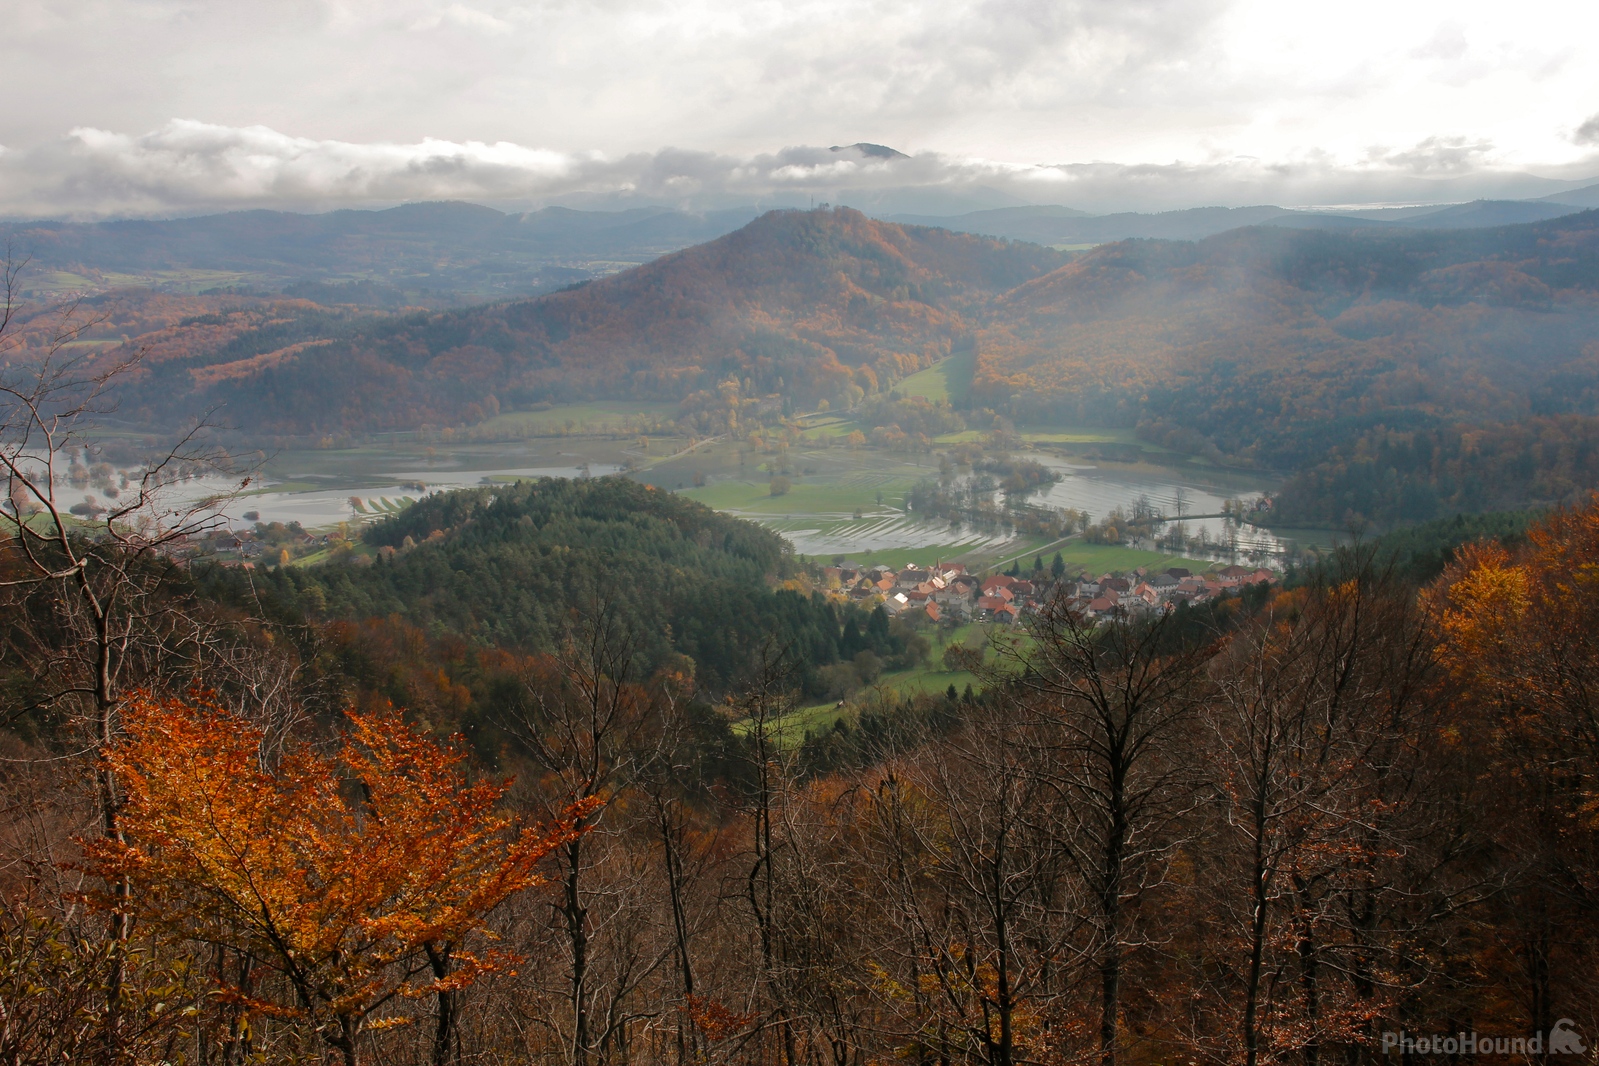 Image of Planinsko Polje (Planina Plains) Viewpoint by Jules Renahan